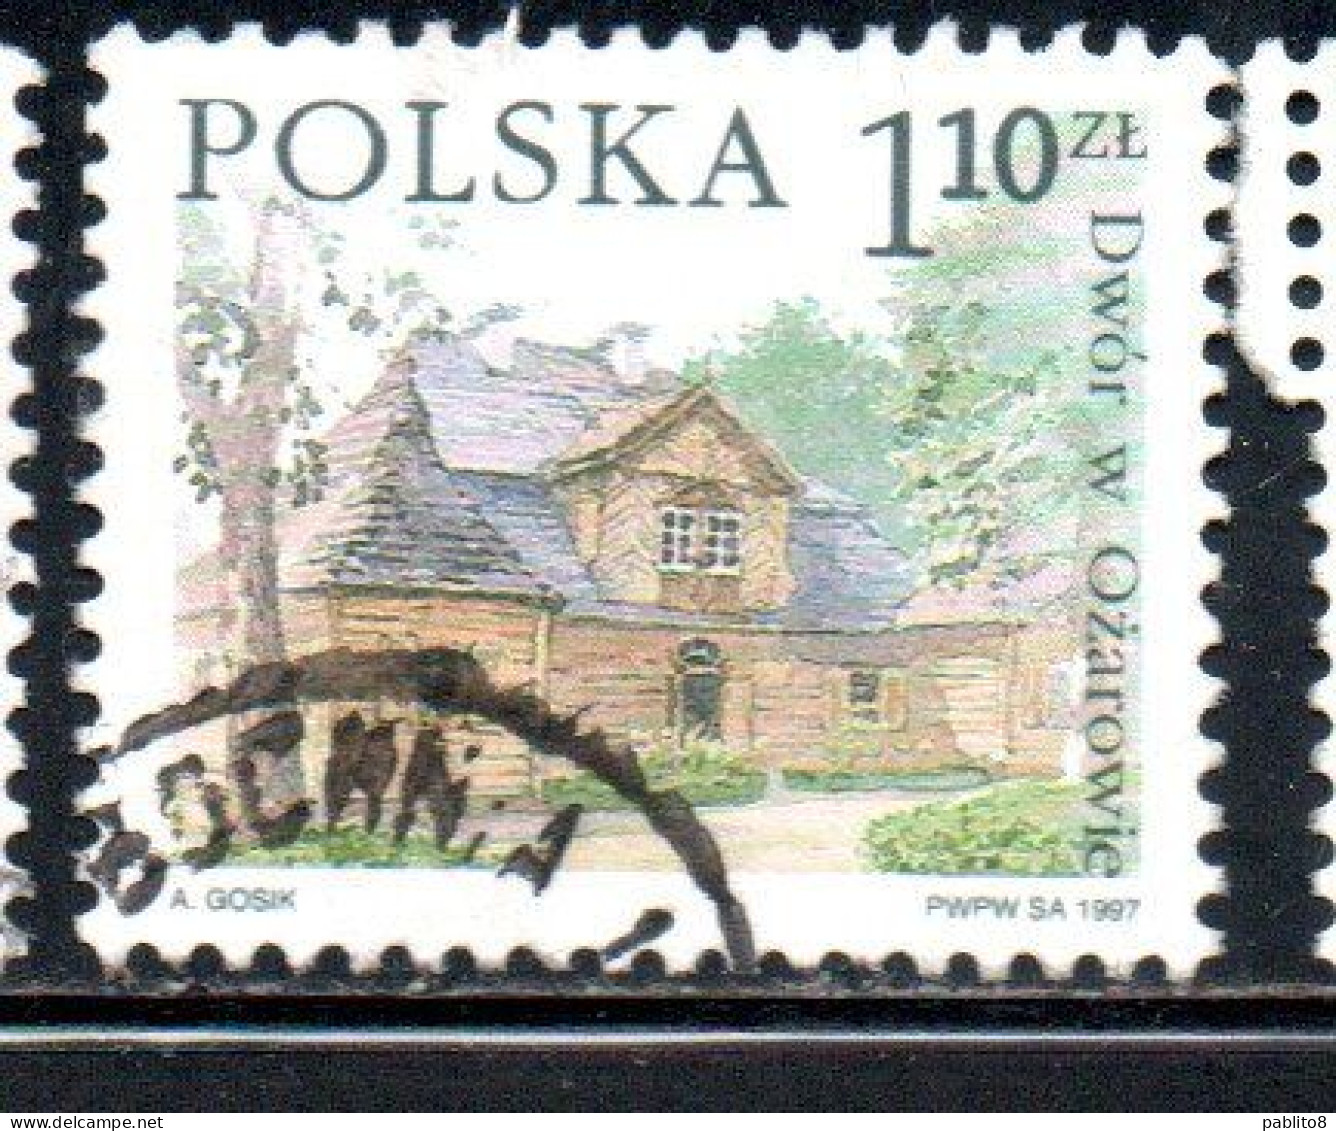 POLONIA POLAND POLSKA 1997 COUNTRY ESTATES OZAROWIE 1.10z USED USATO OBLITERE' - Usati